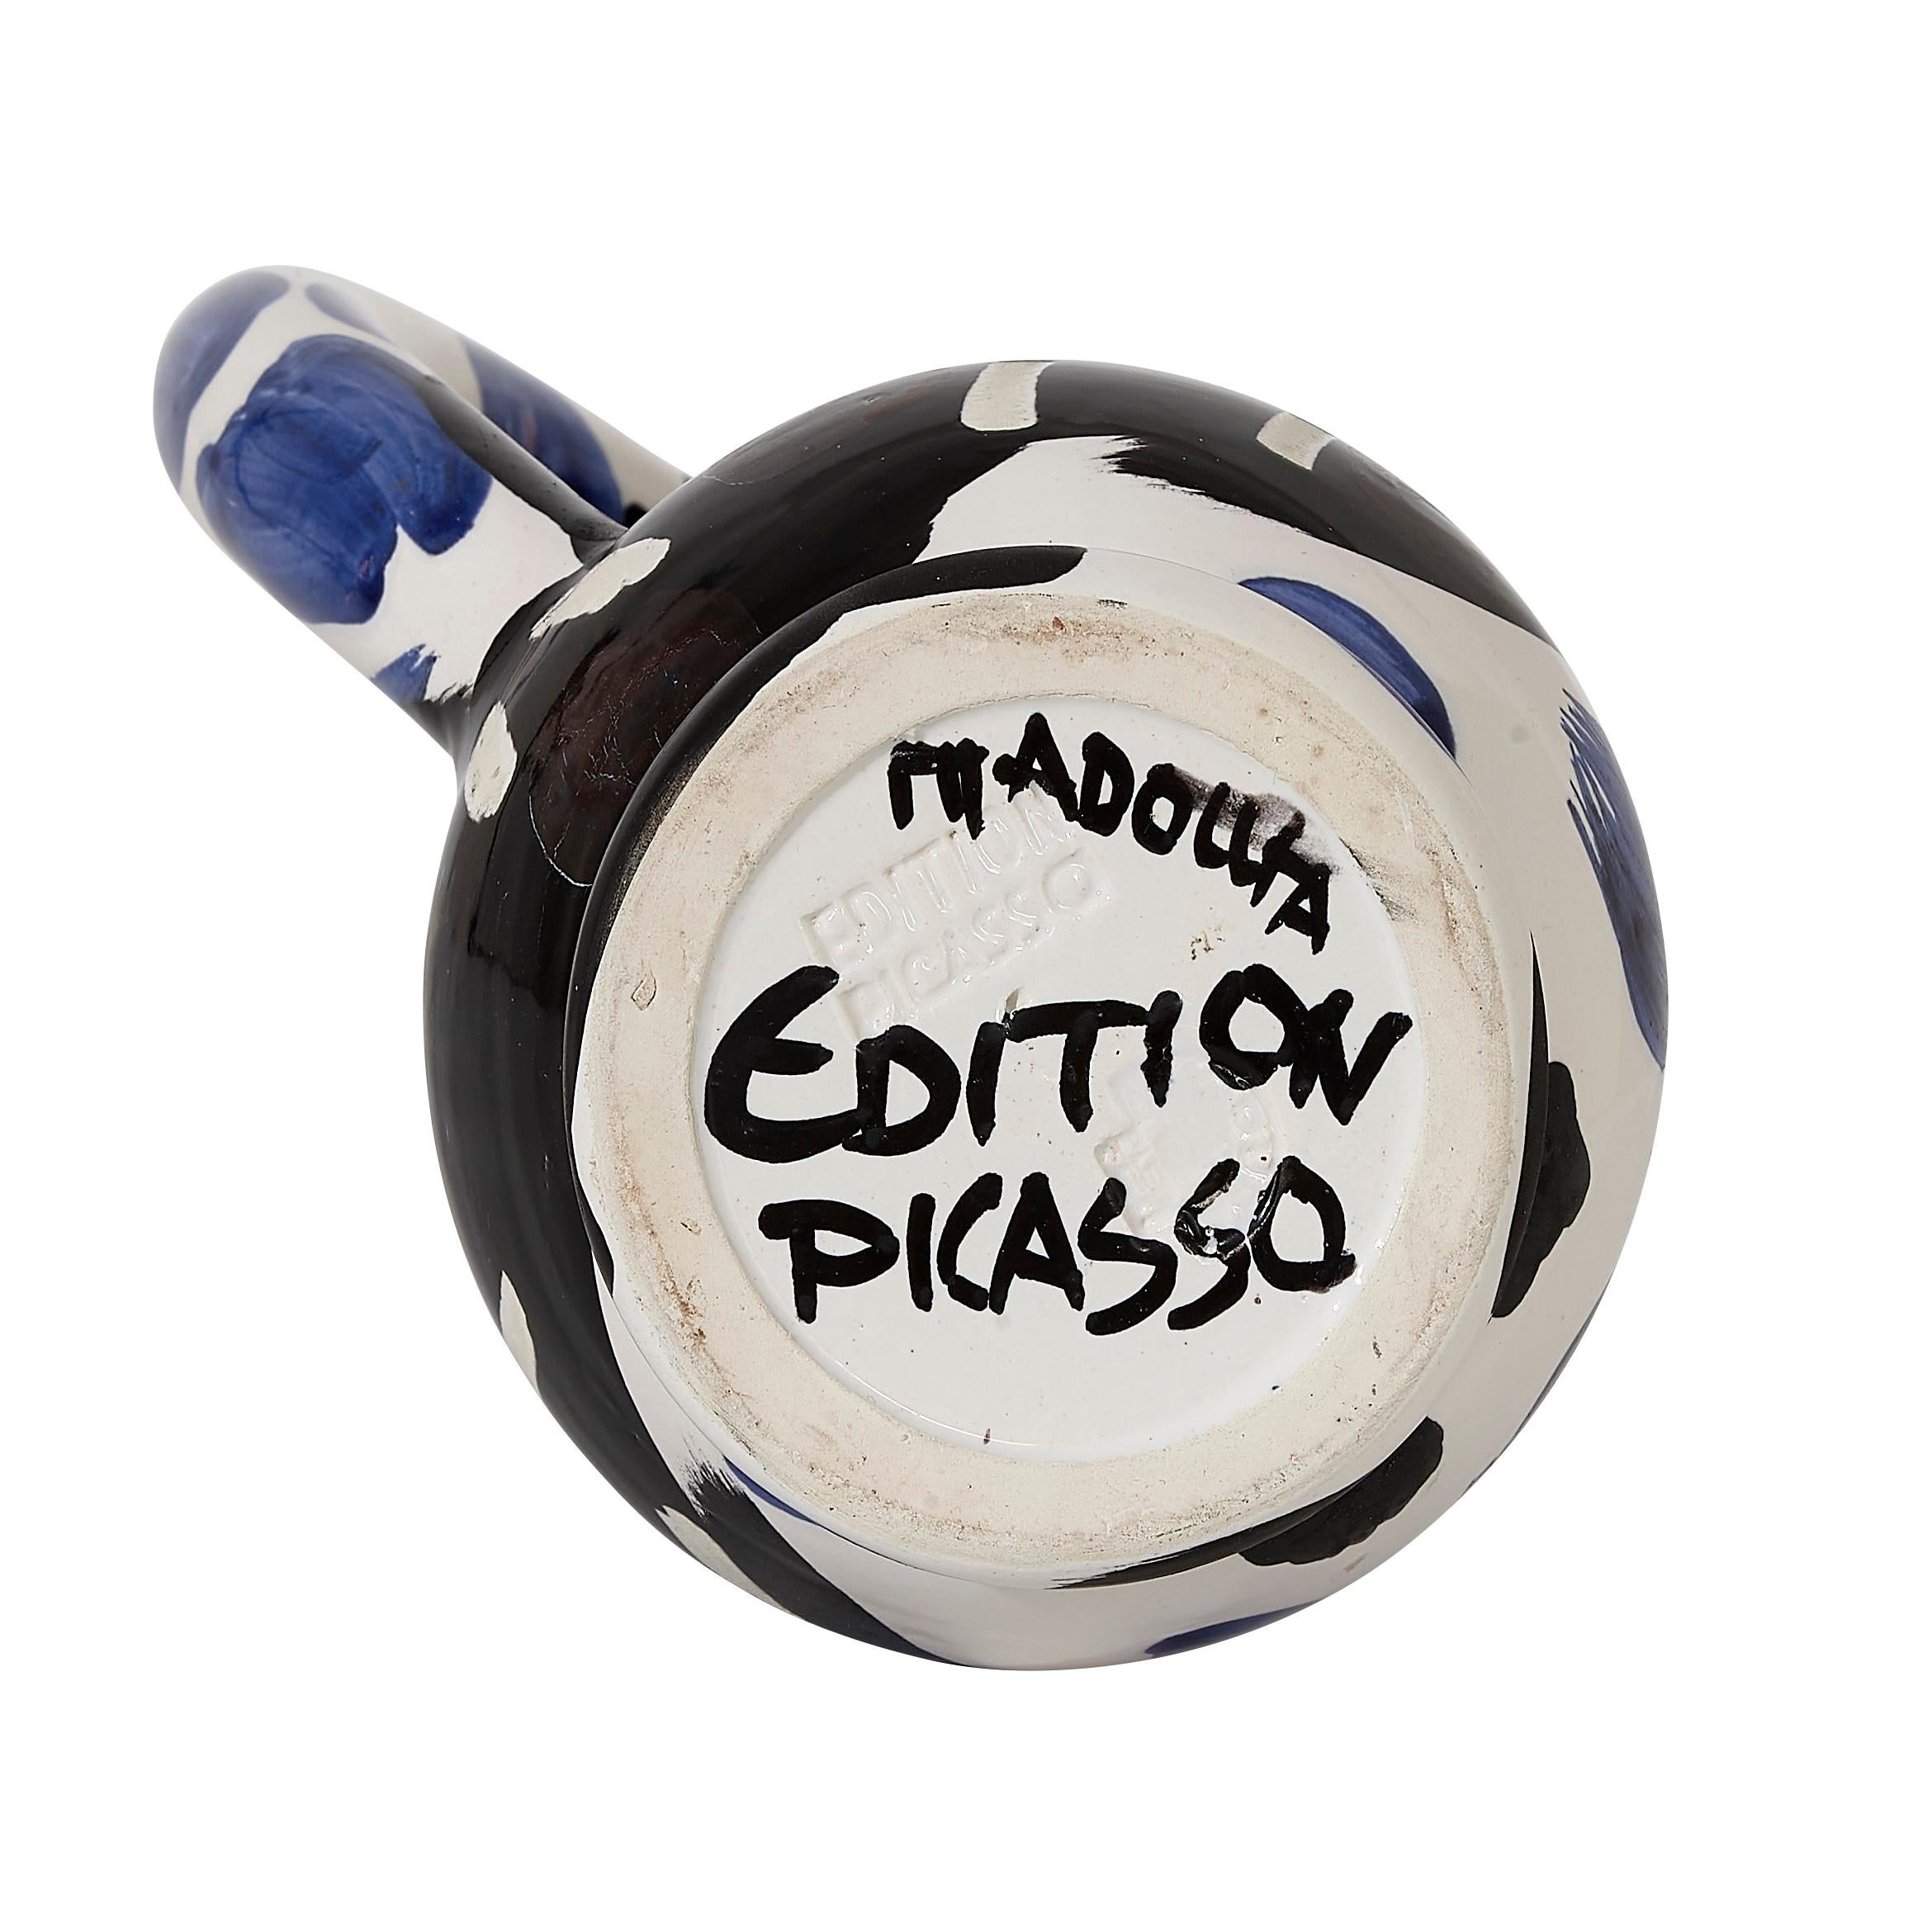 Pablo Picasso 'Cruchon hibou' A. R. 293 2